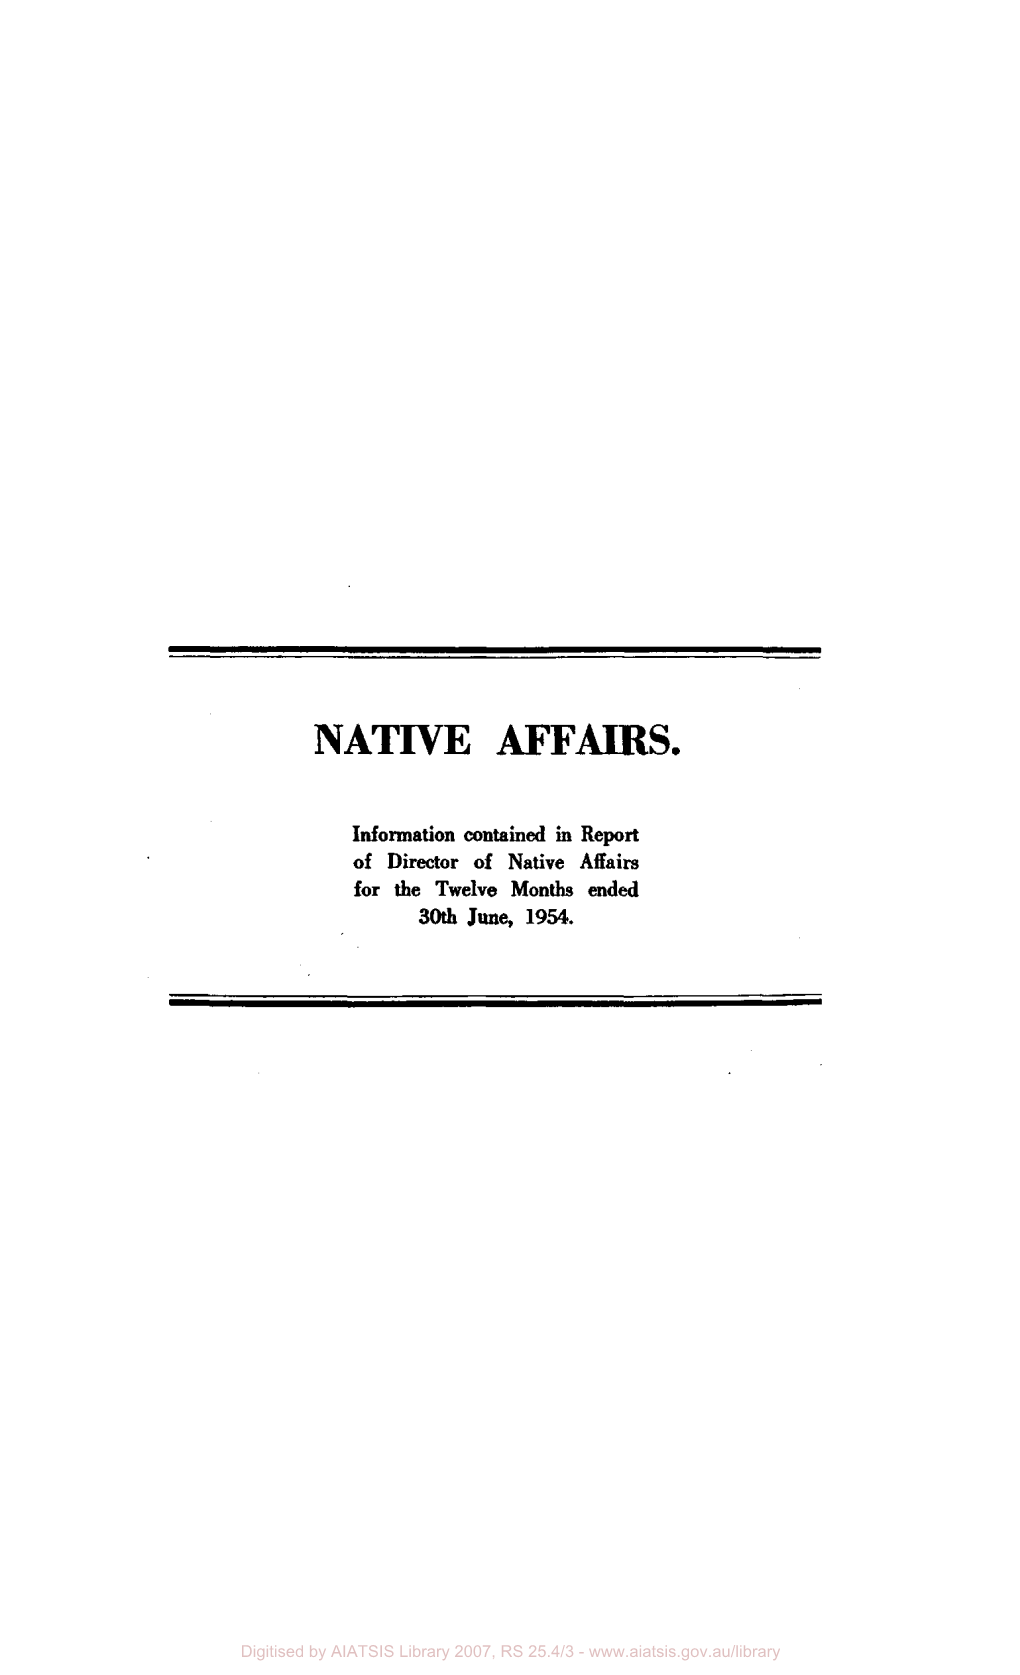 Native Affairs